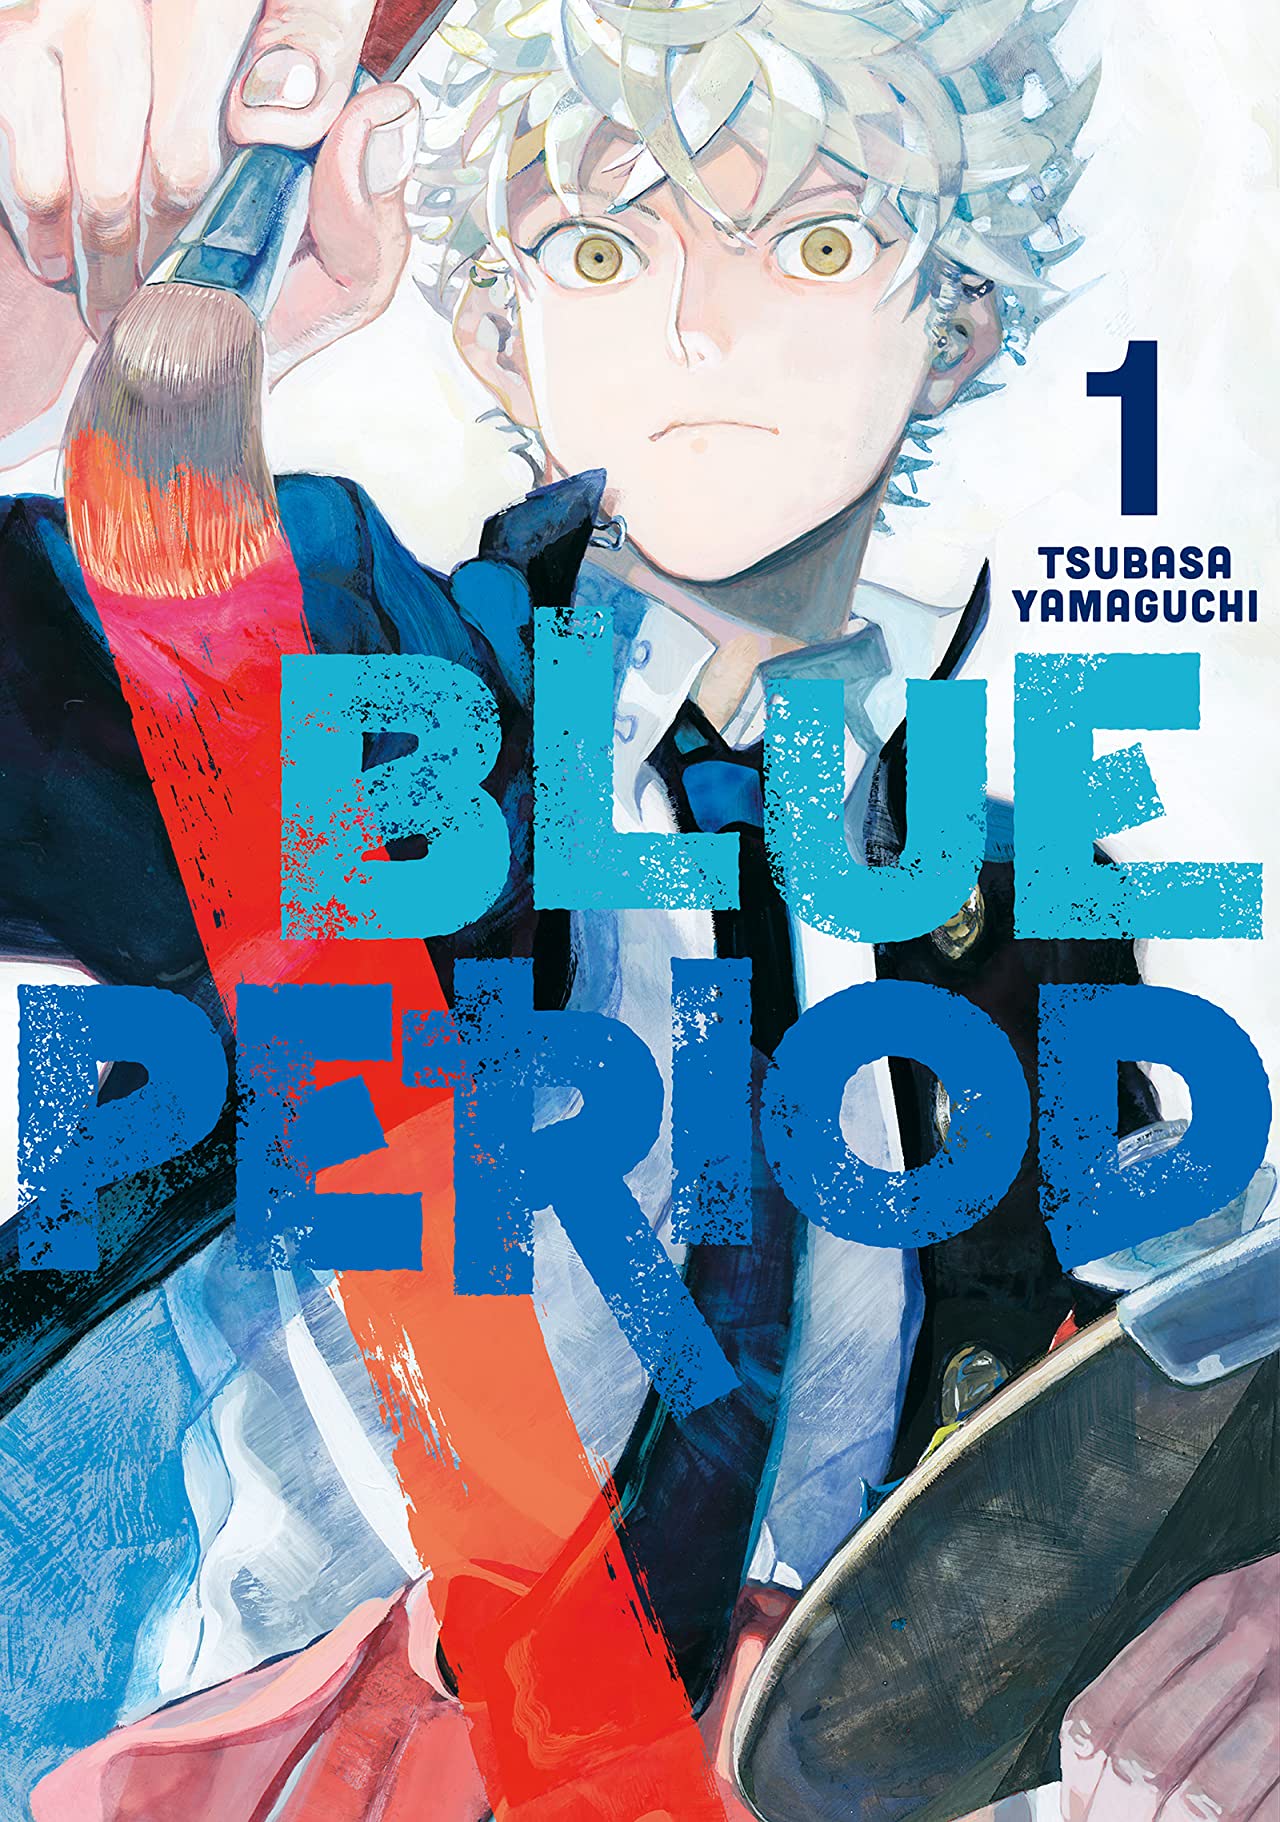 Art manga Blue Period is getting an anime adaption